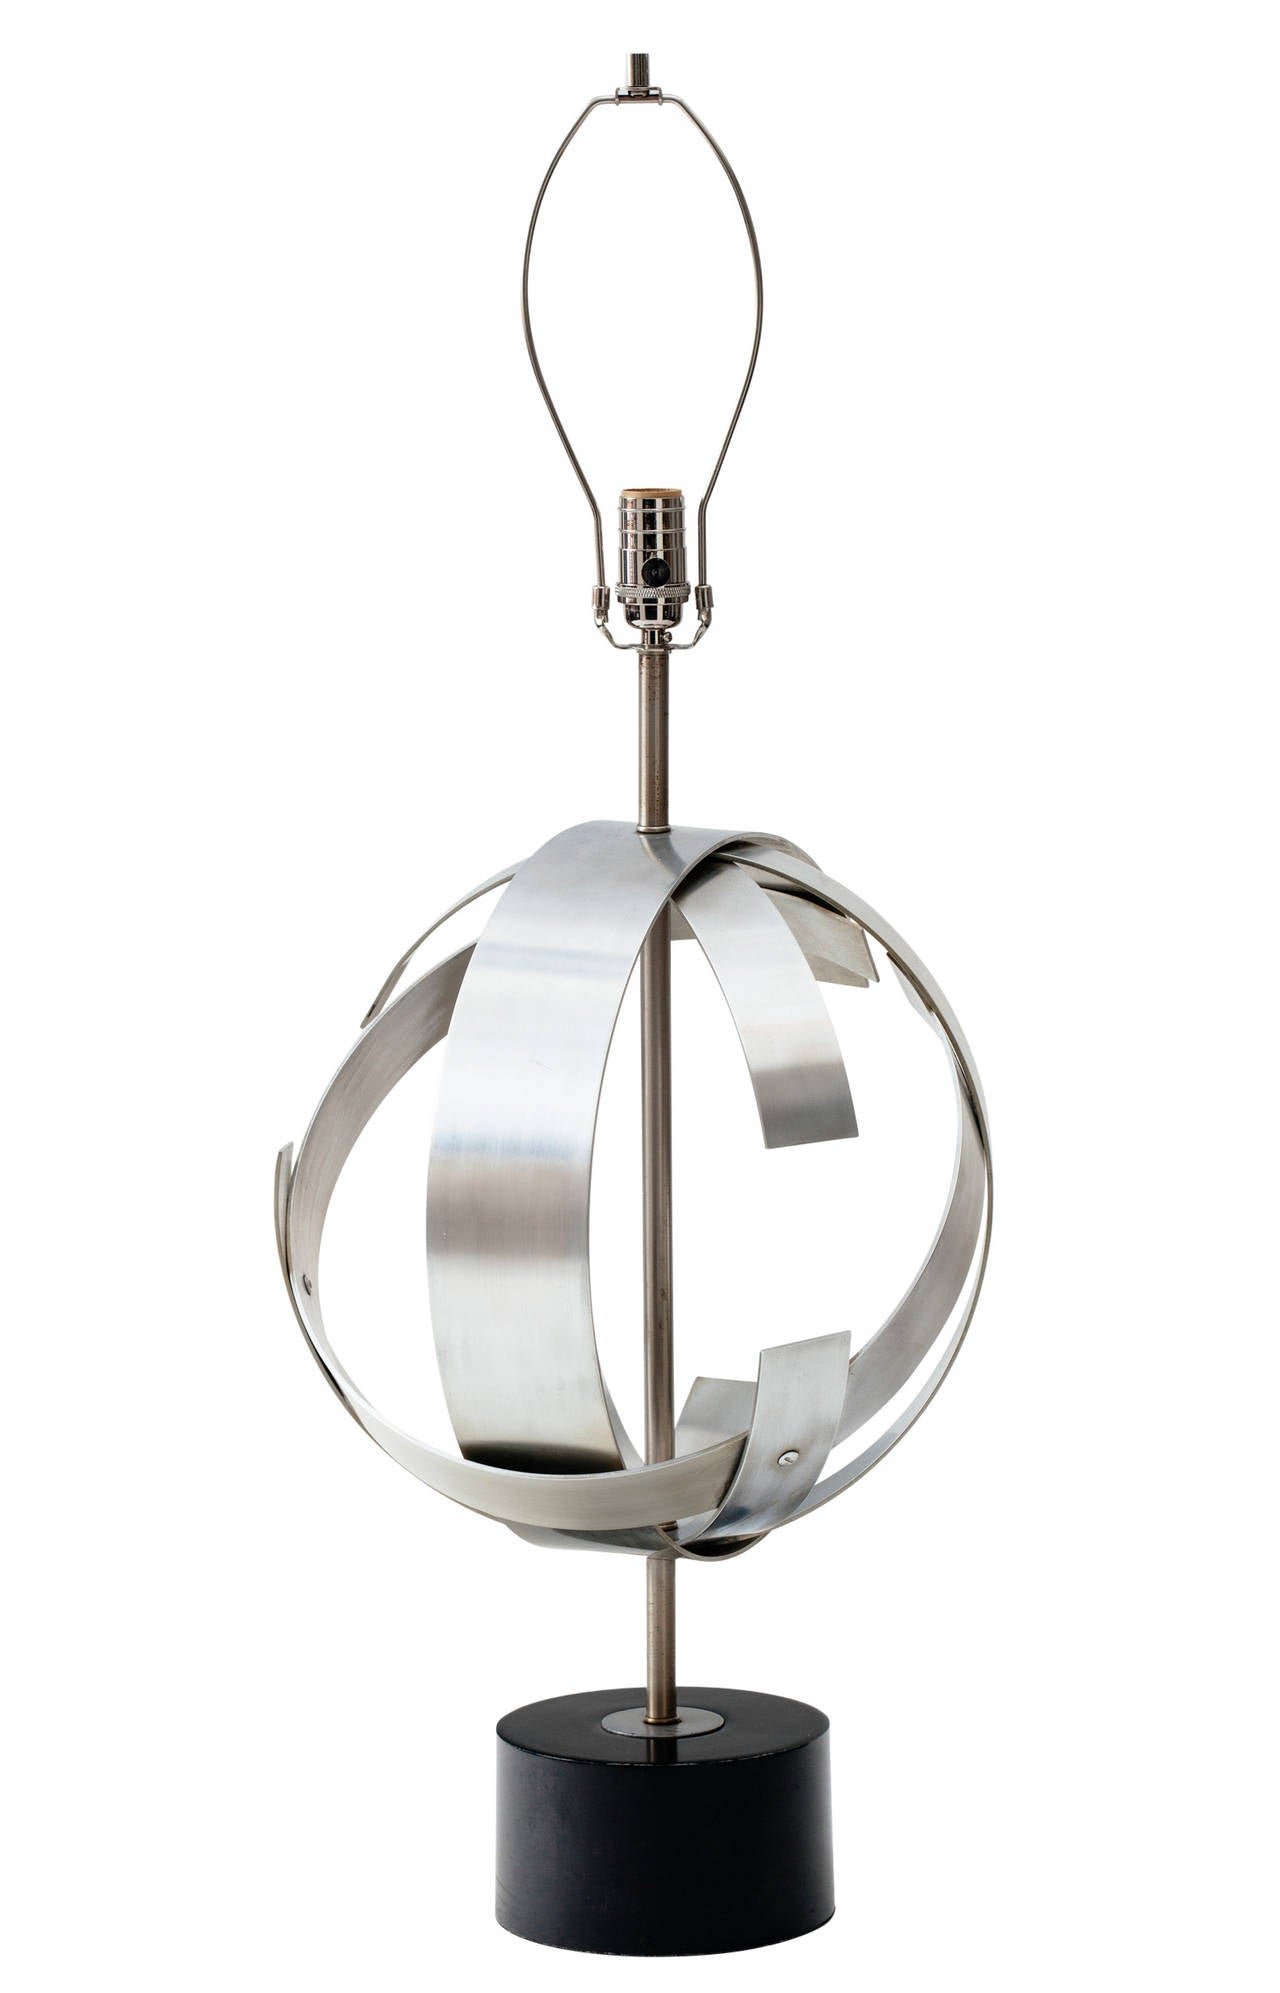  Abstract cut aluminum sphere lamp on circular enameled metal pedestal base, by Laurel Lamp Co., USA, circa 1970.